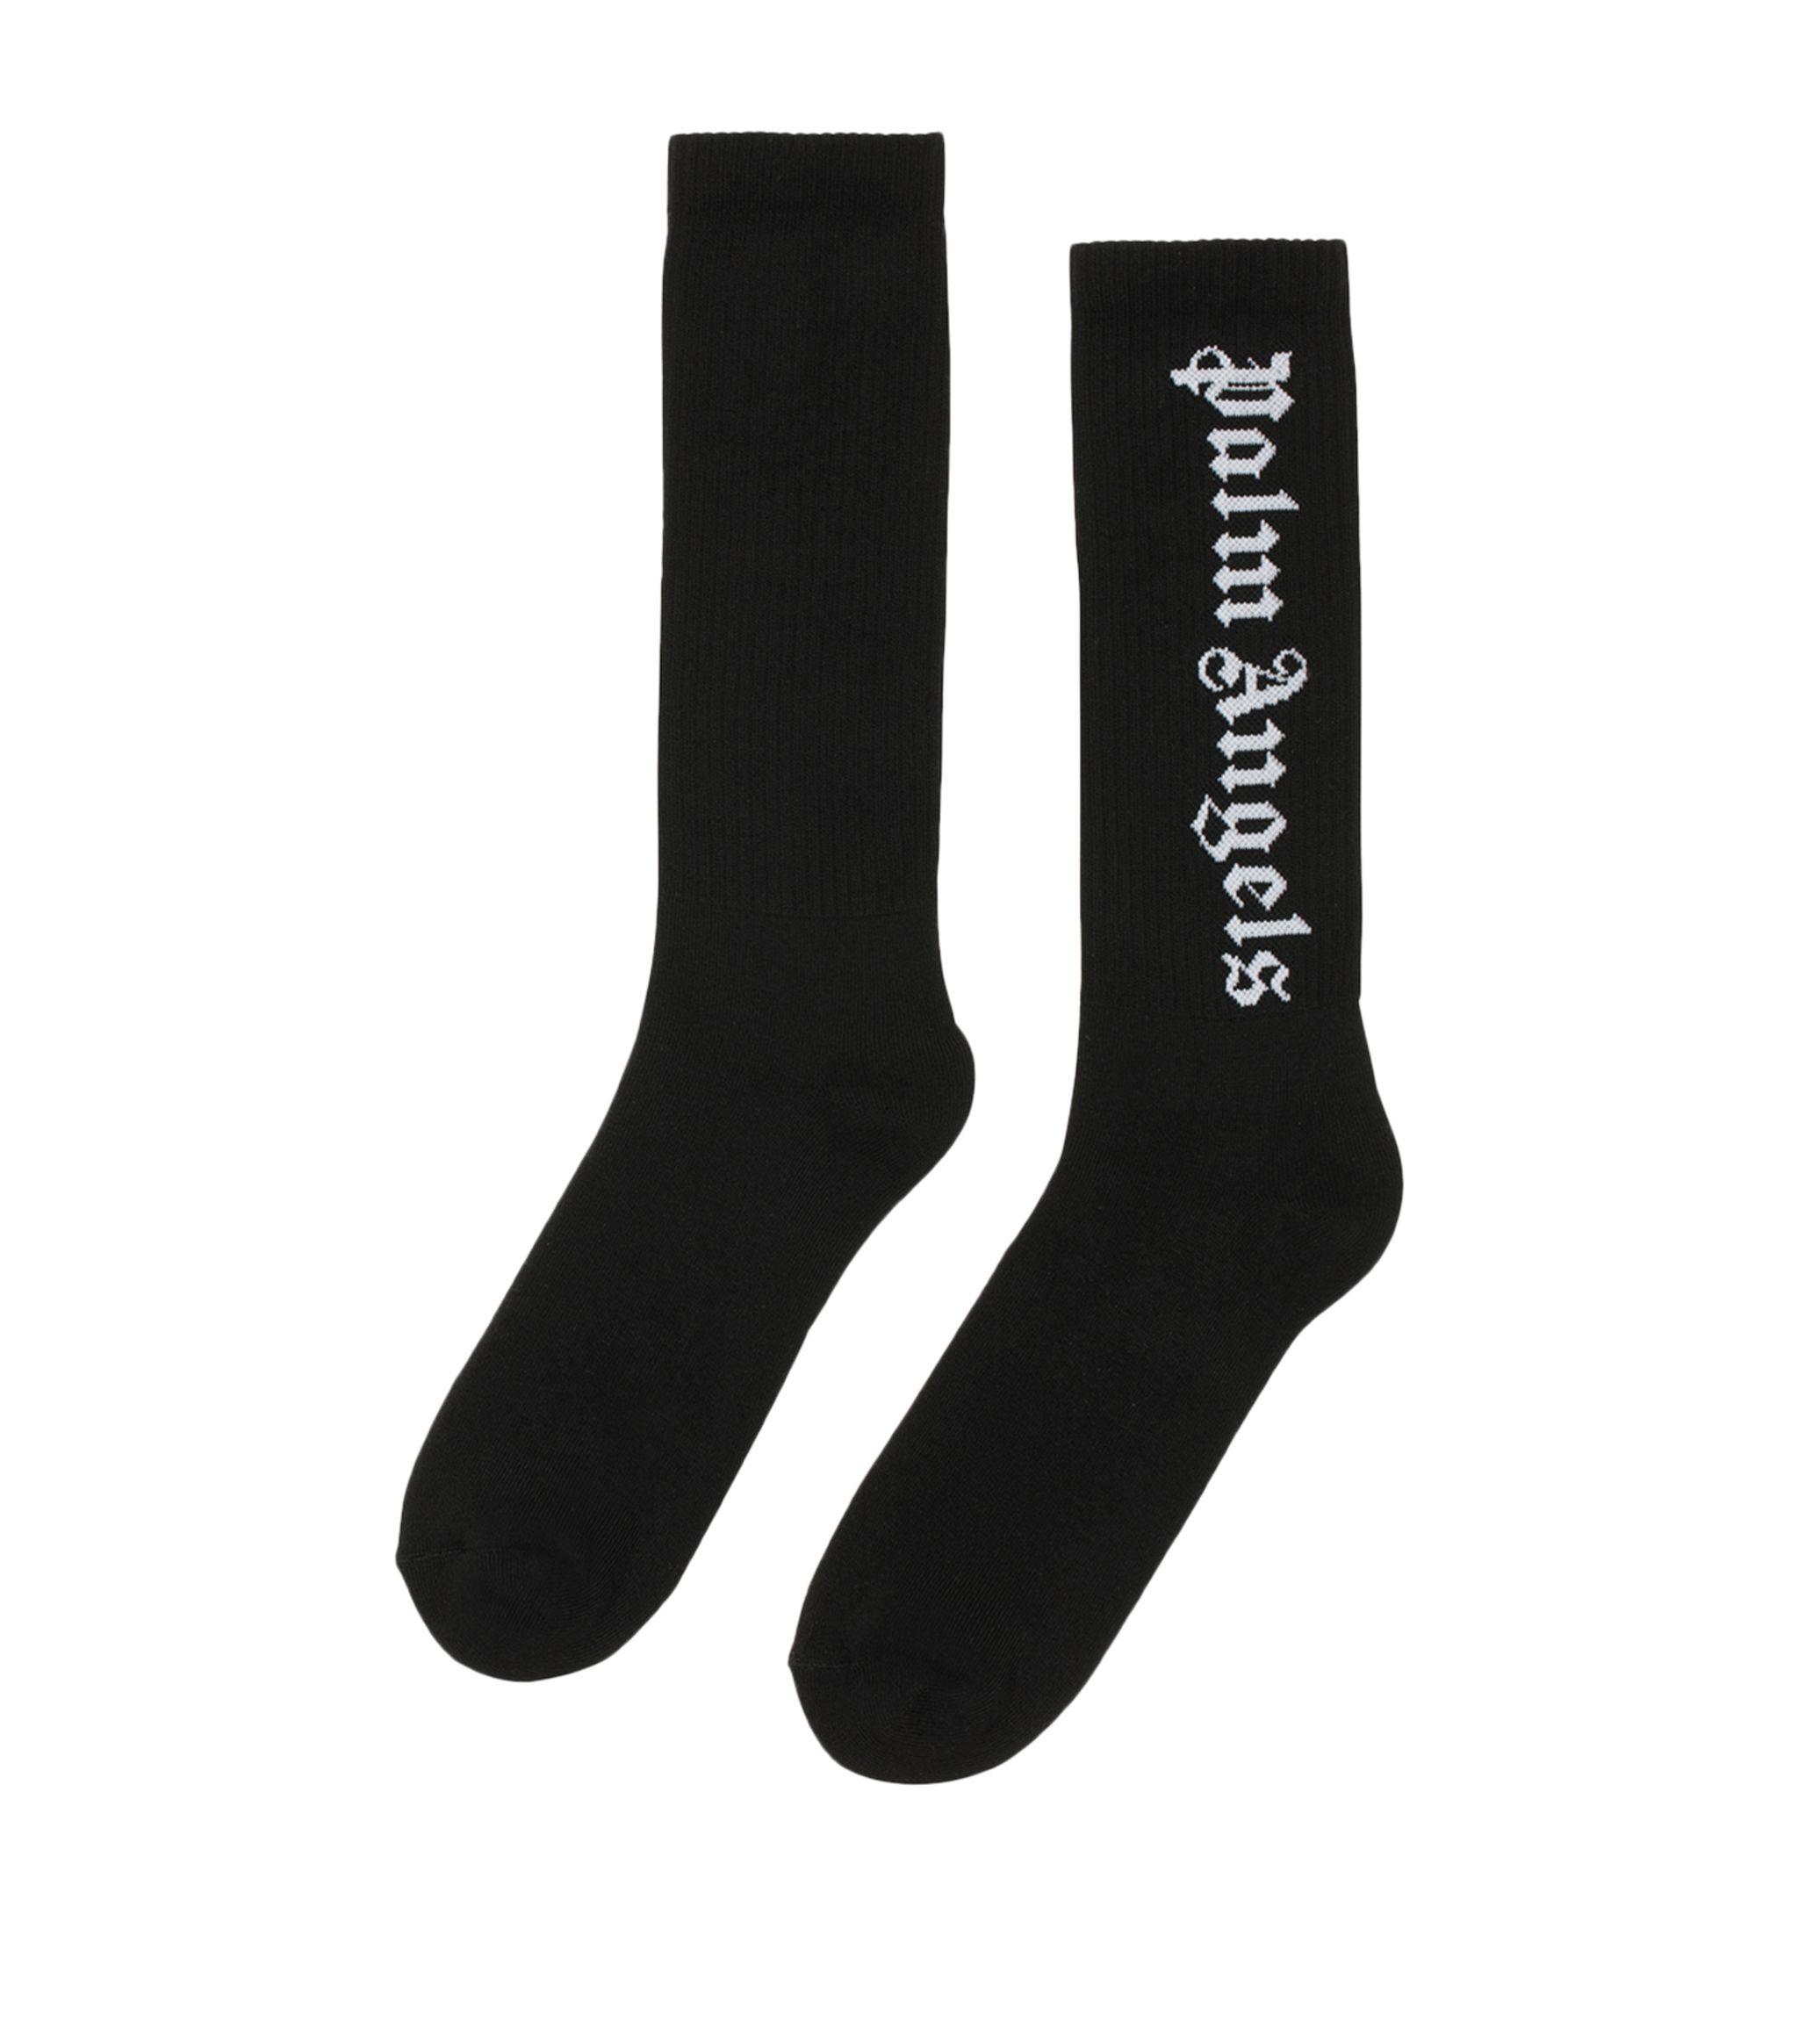 Palm Angels Cotton Logo Socks in Black for Men - Lyst